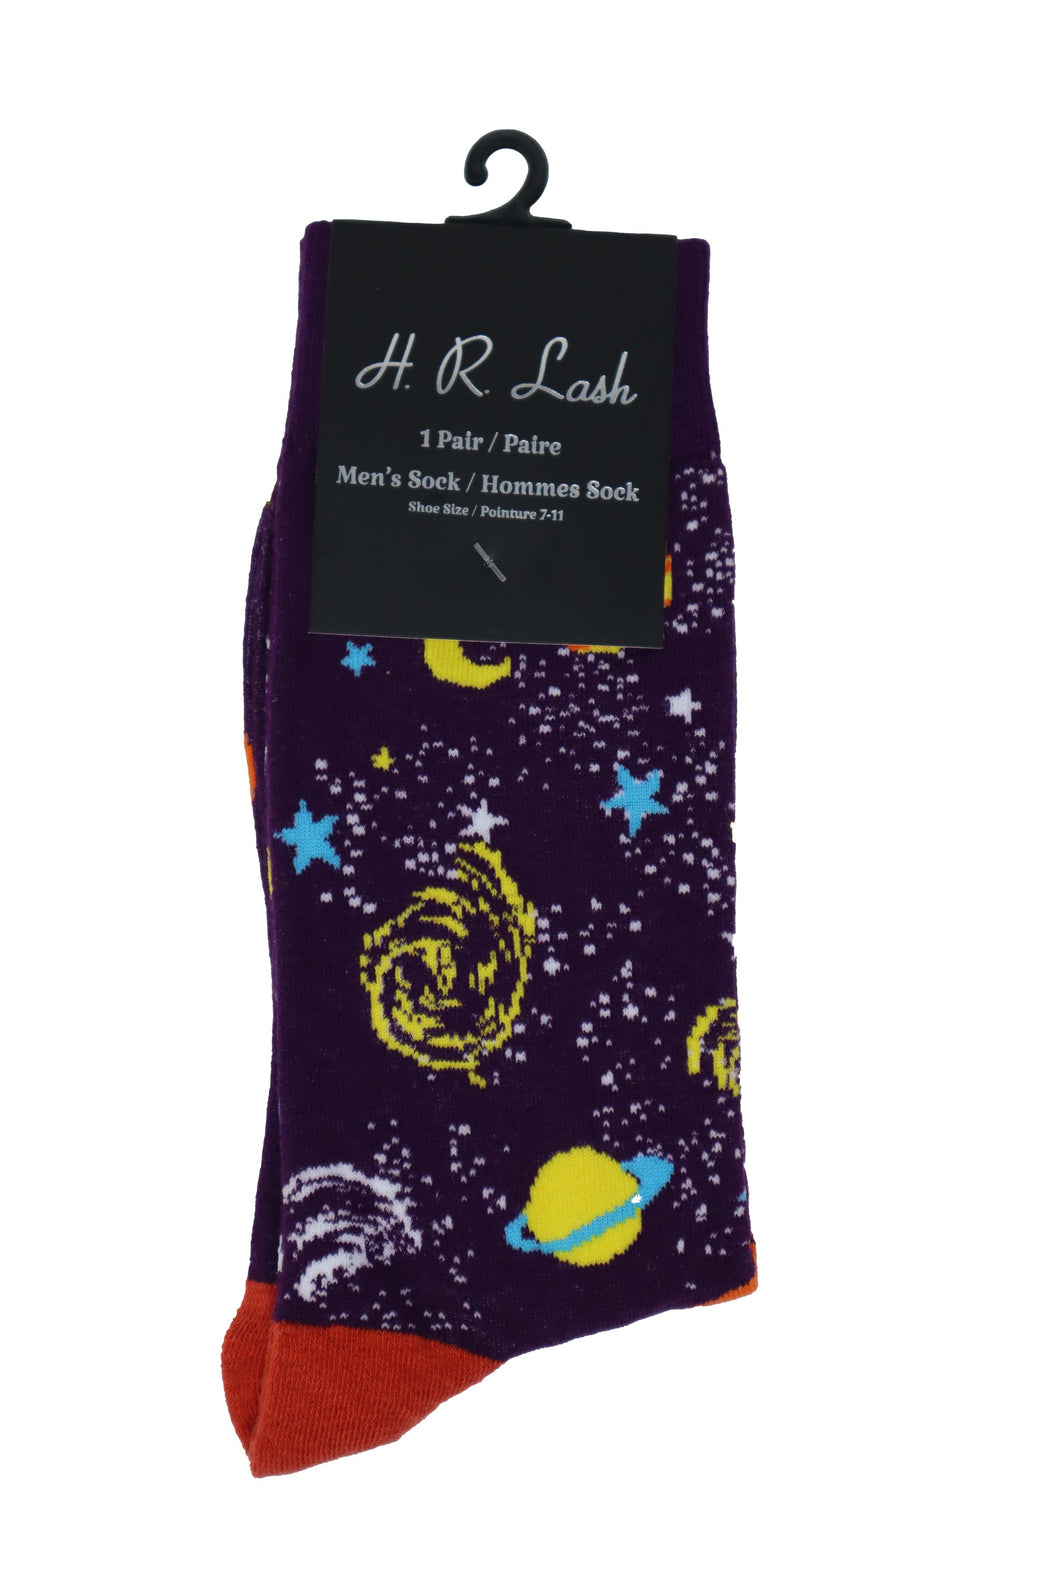 H. R. Lash | FS290  | Fun Socks | Space / Purple